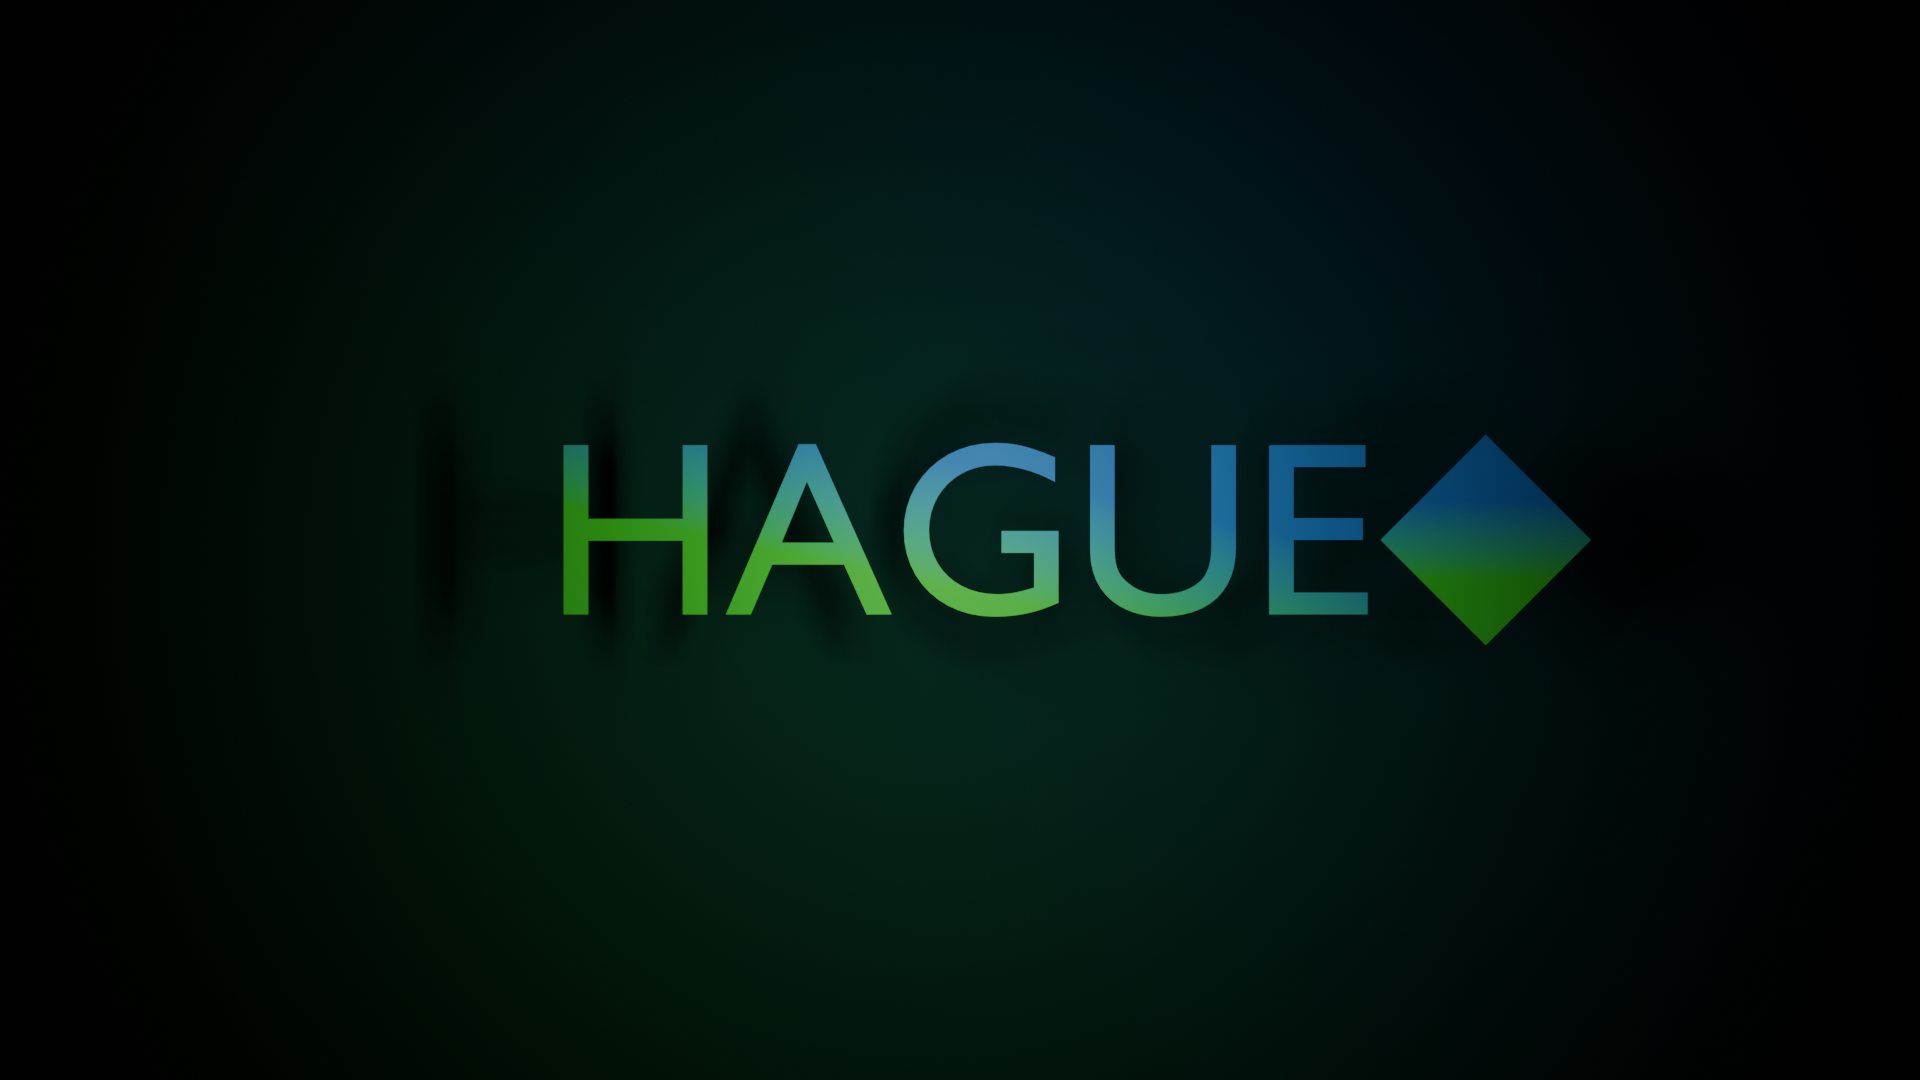 HAGUE: Hide And Go